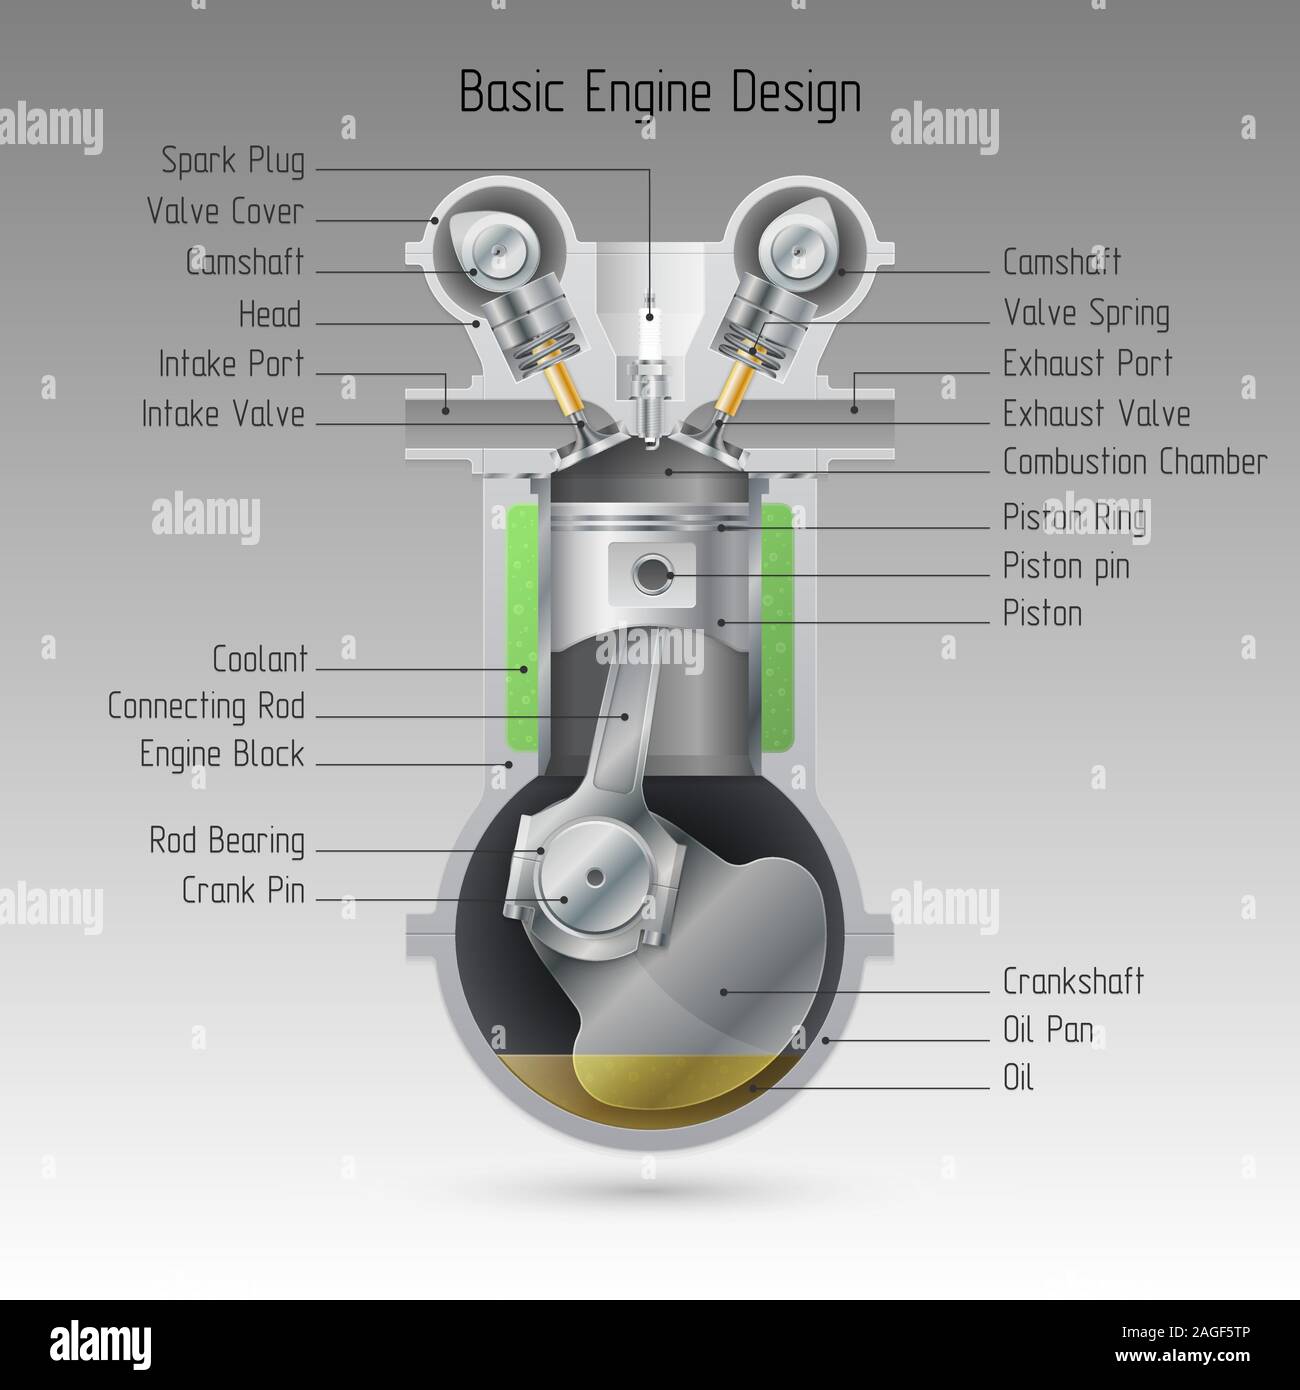 Basic engine design.  Vector illustration Stock Vector